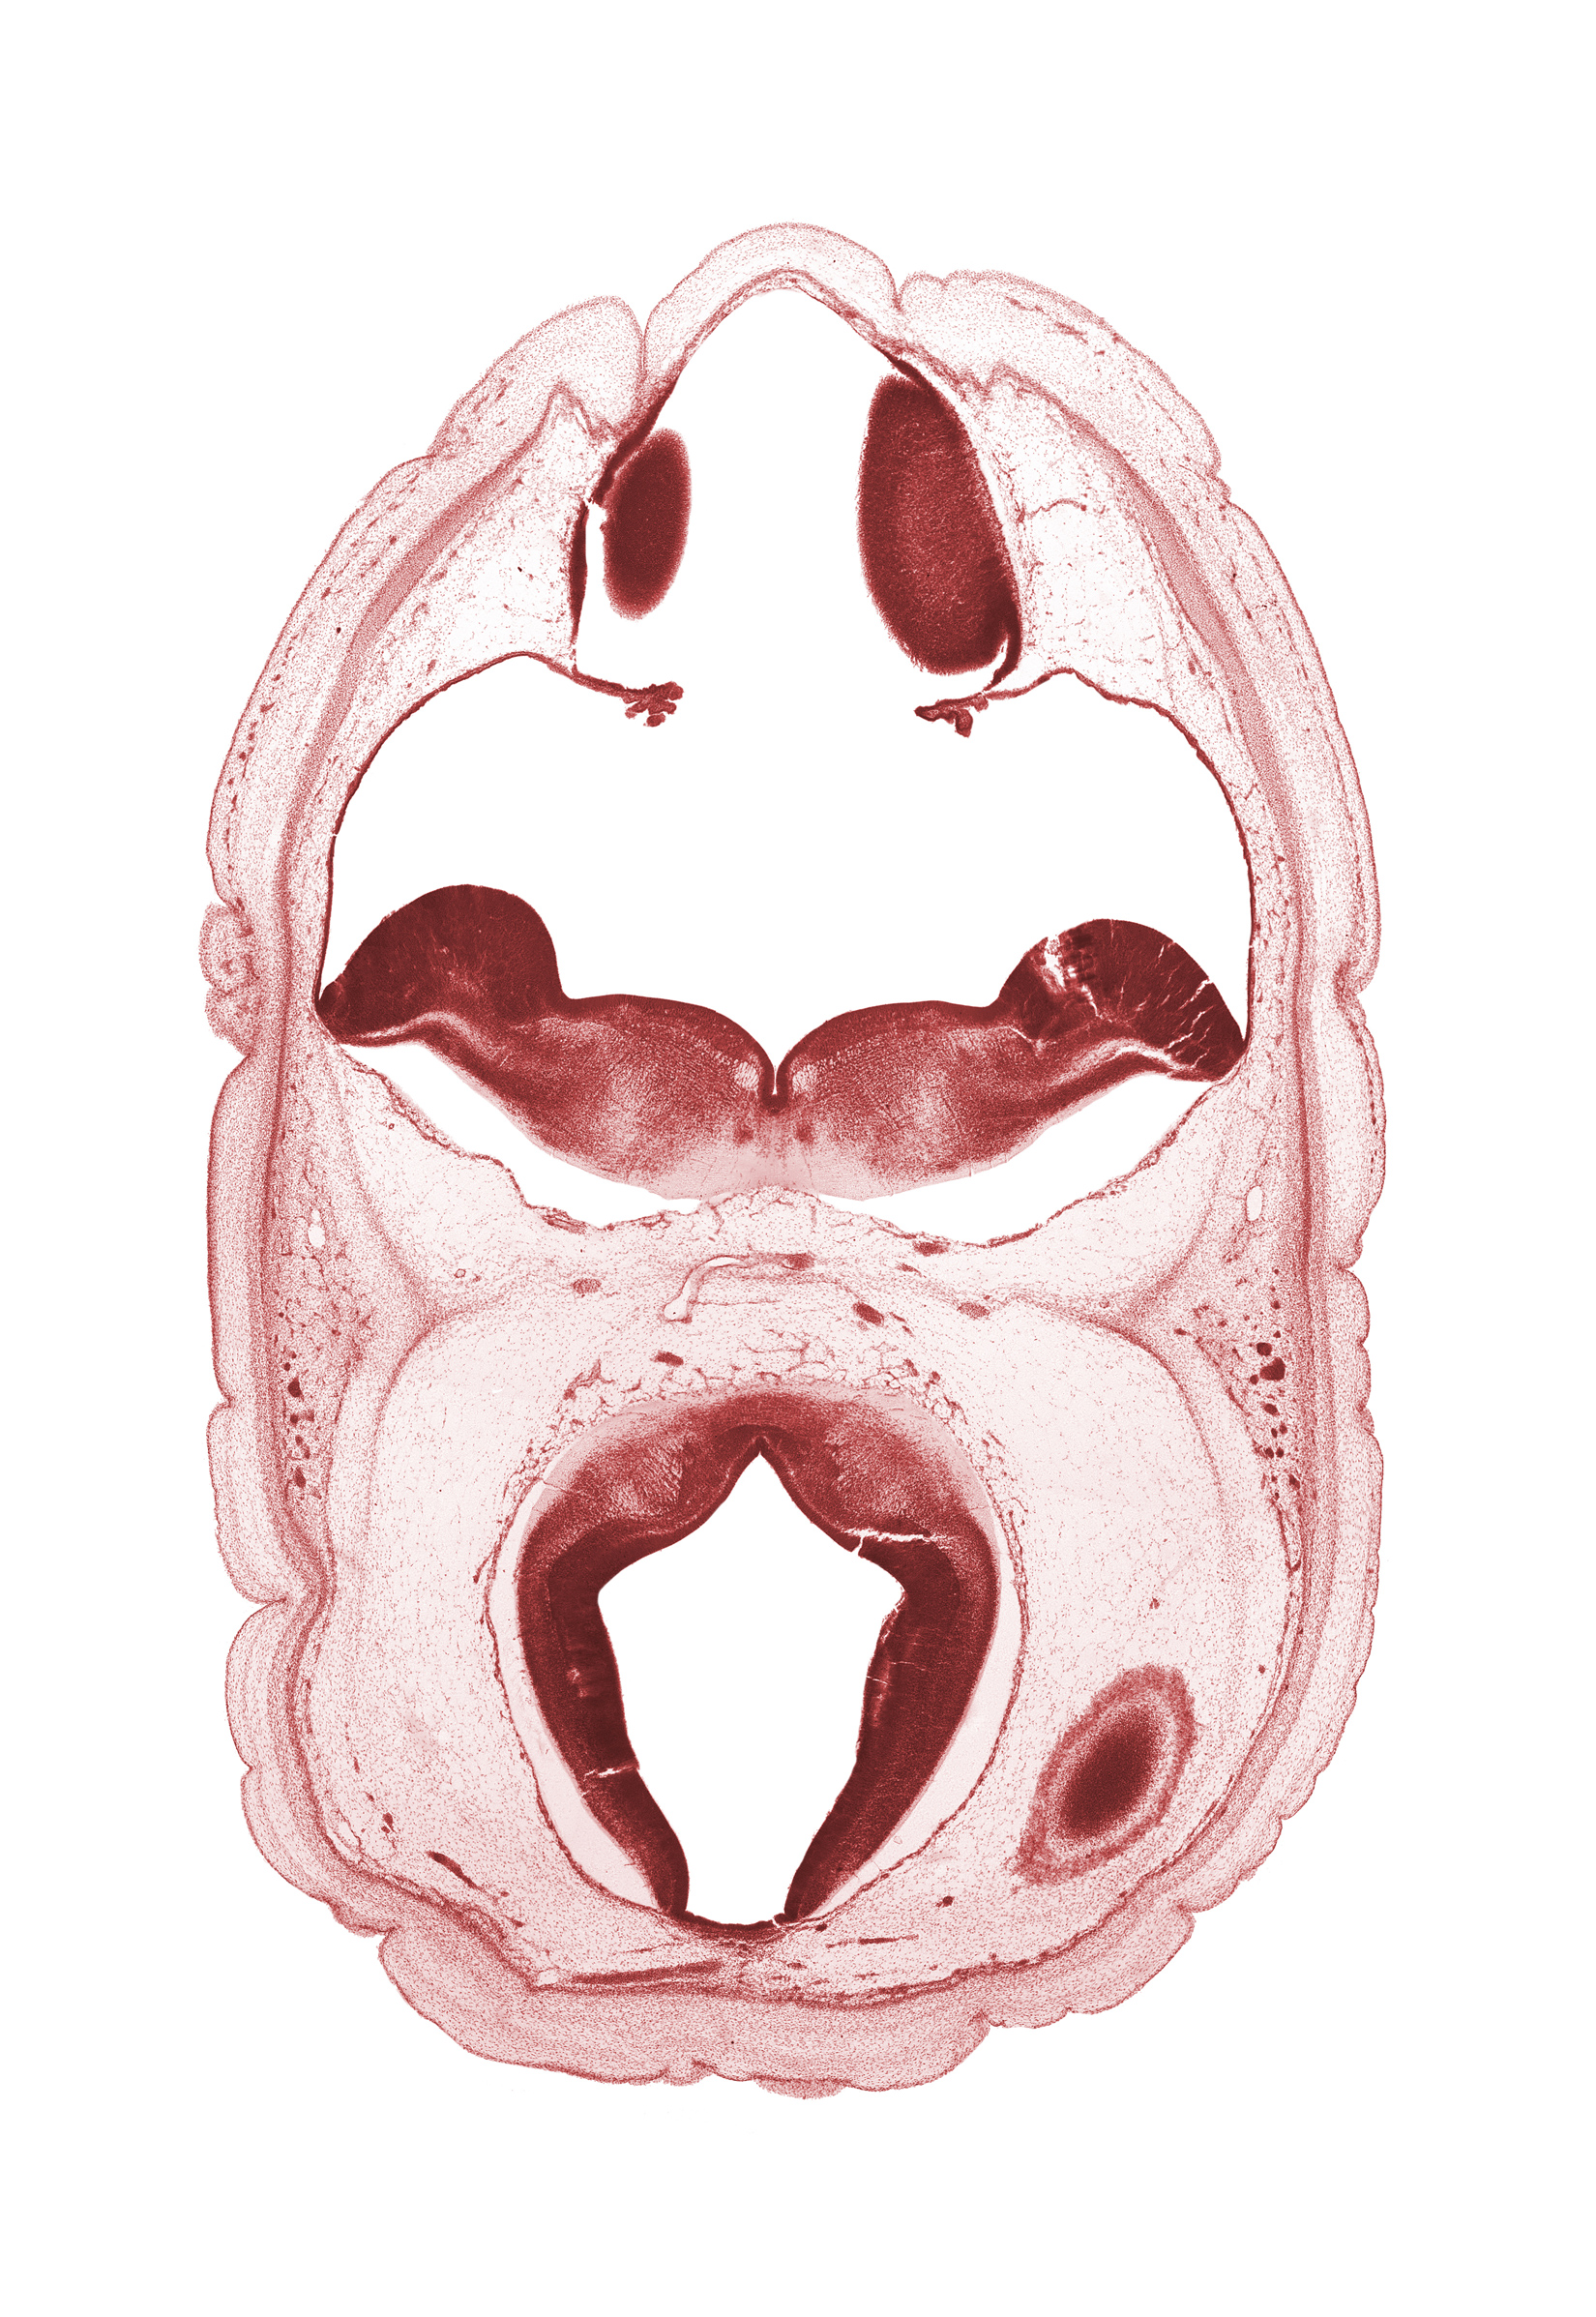 alar plate of myelencephalon, artifact space(s), cerebral aqueduct (mesocoele), cerebral vesicle (hemisphere), choroid plexus, dural band for tentorium cerebelli, median sulcus, posterior cerebral artery, rhombencoel (fourth ventricle), roof plate, roof plate of mesencephalon, sulcus limitans, tectum of mesencephalon, tegmentum of mesencephalon, trochlear nerve (CN IV)